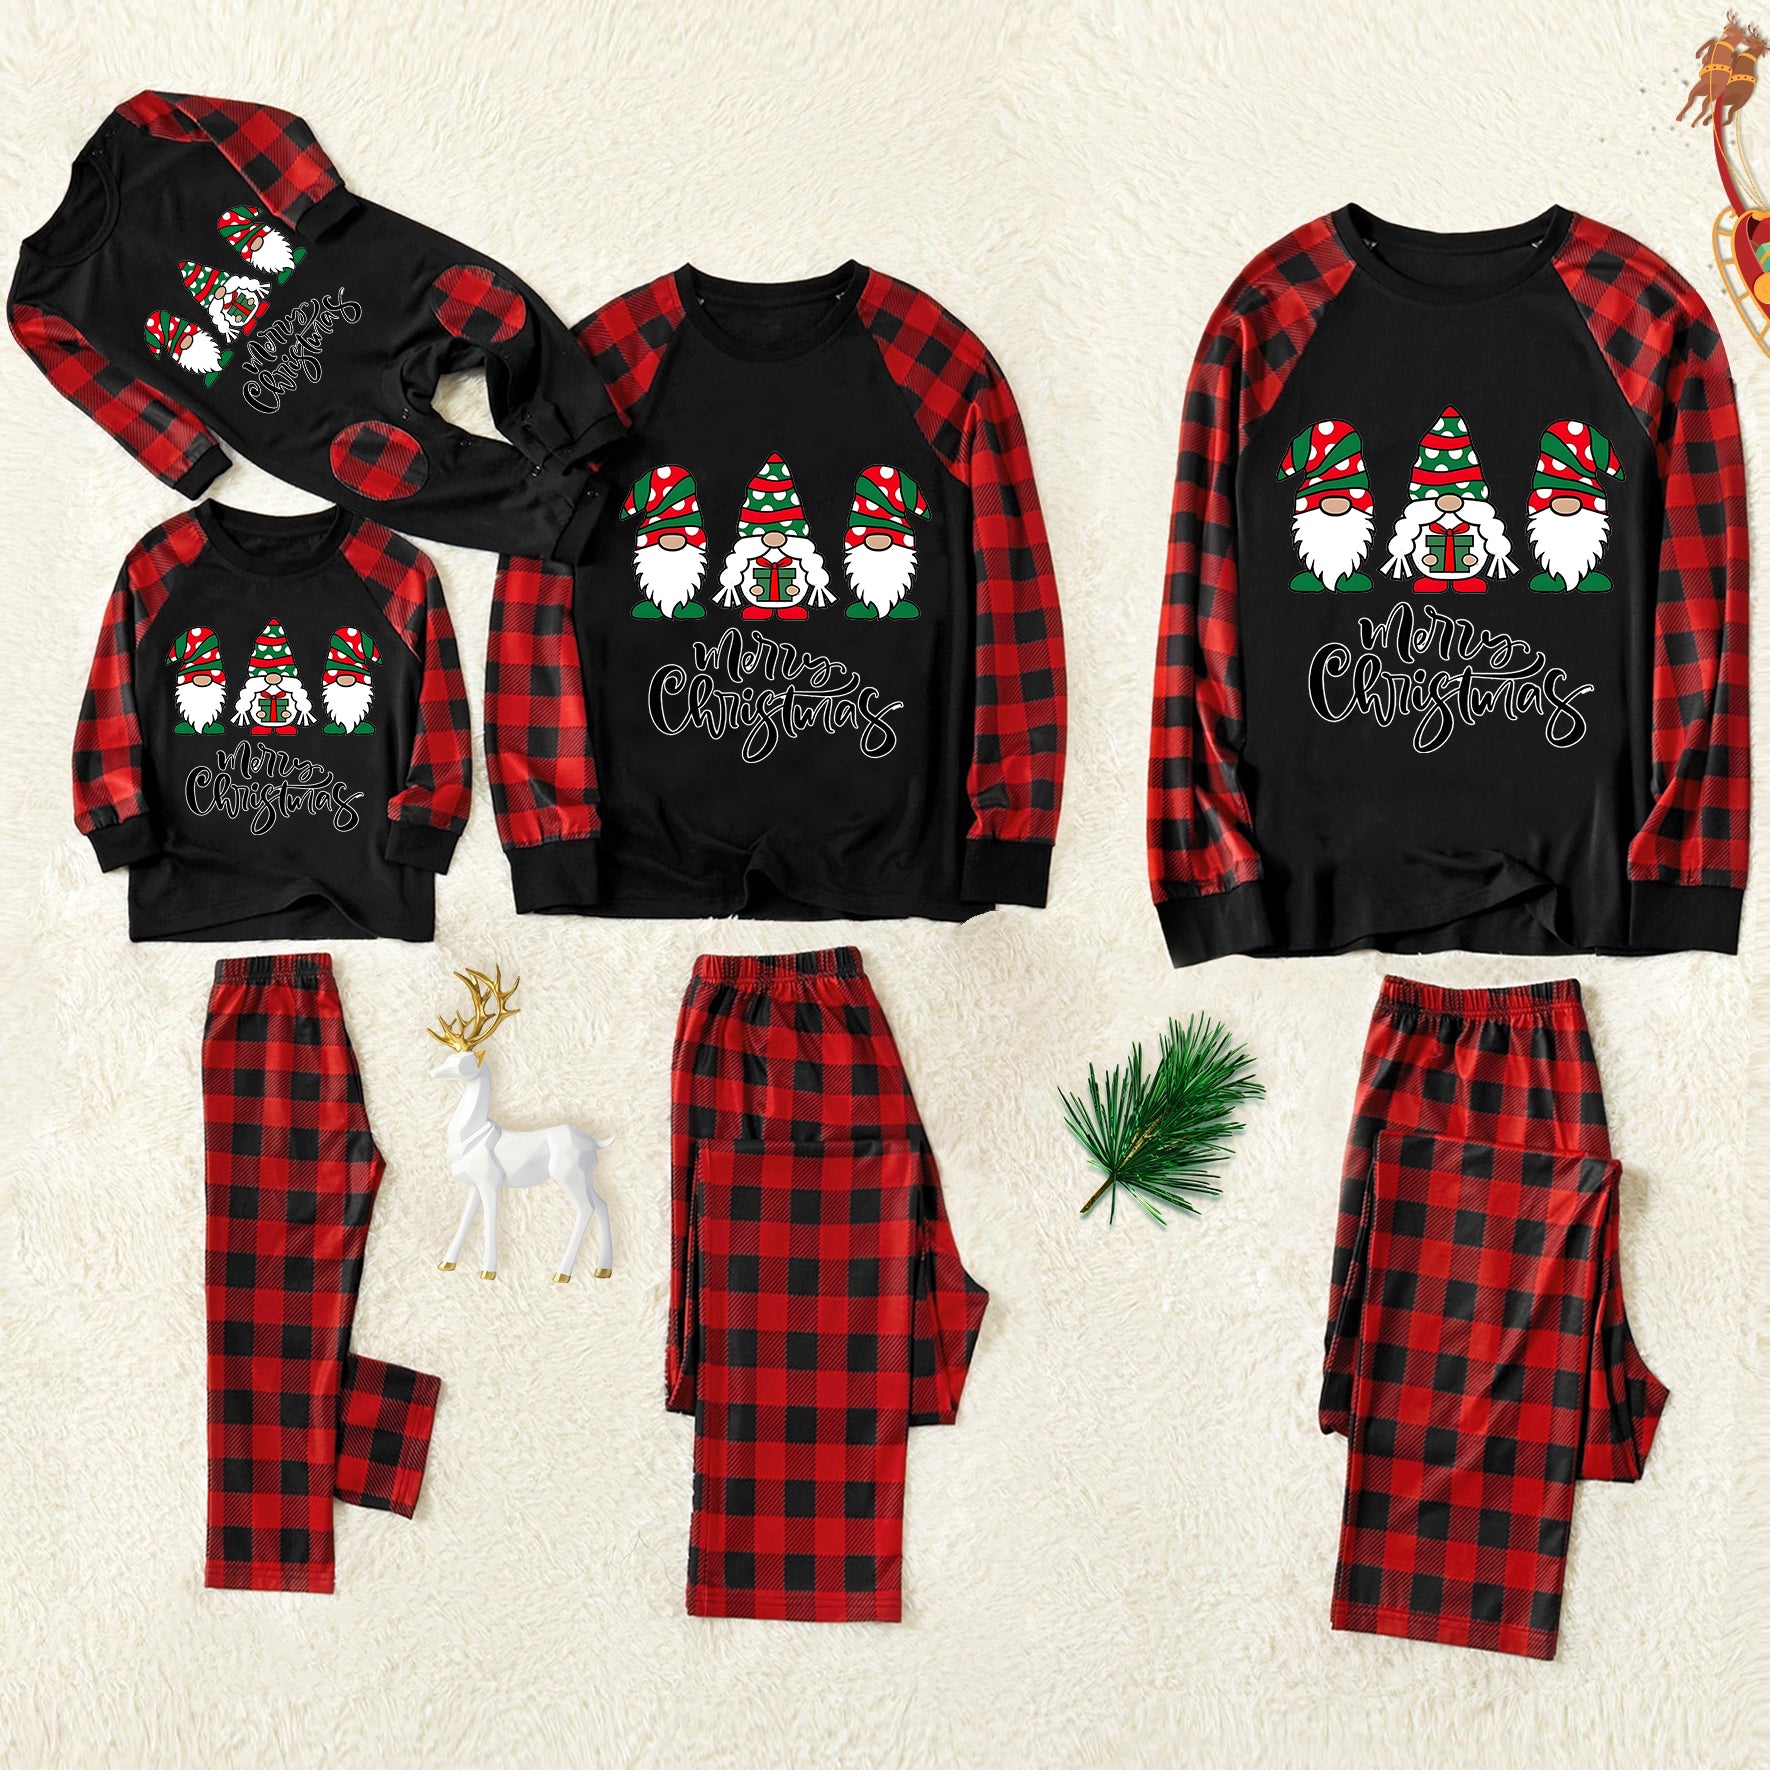 Merry Christmas Cute Gnome Print Casual Long Sleeve Sweatshirts Grey Contrast Top and Black & Red Plaid Pants Family Matching Pajamas Set With Dog Bandana